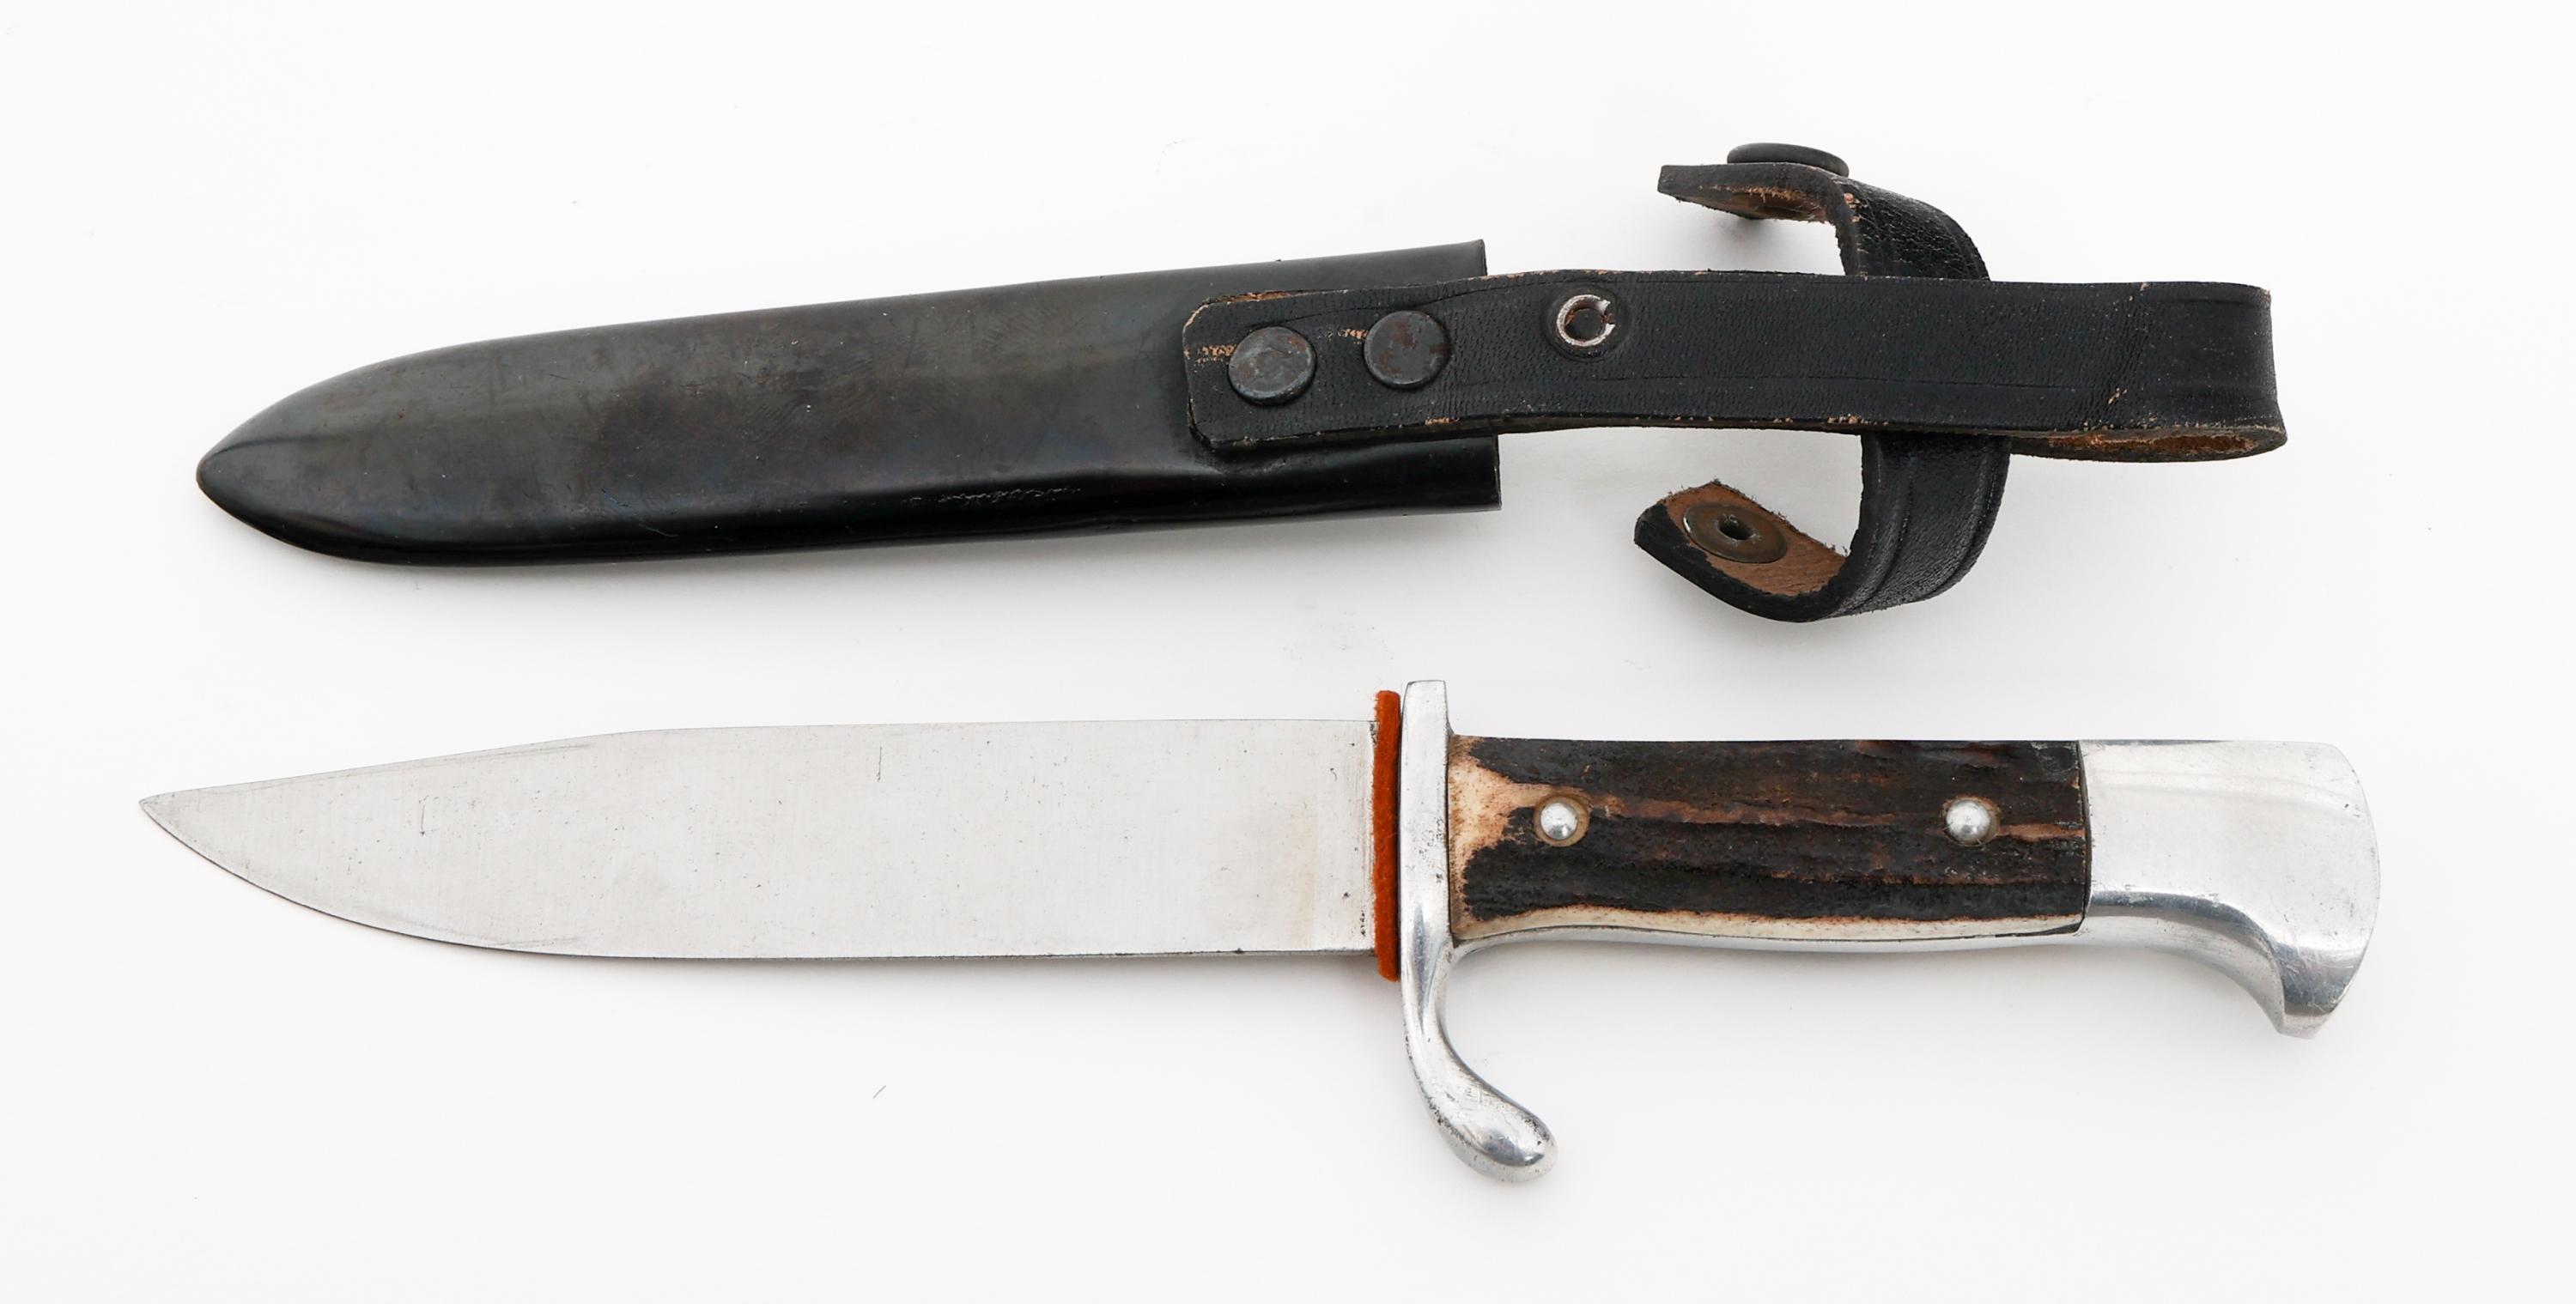 1935 NURNBERG RALLIES JUNGVOLK KNIFE WITH SCABBARD